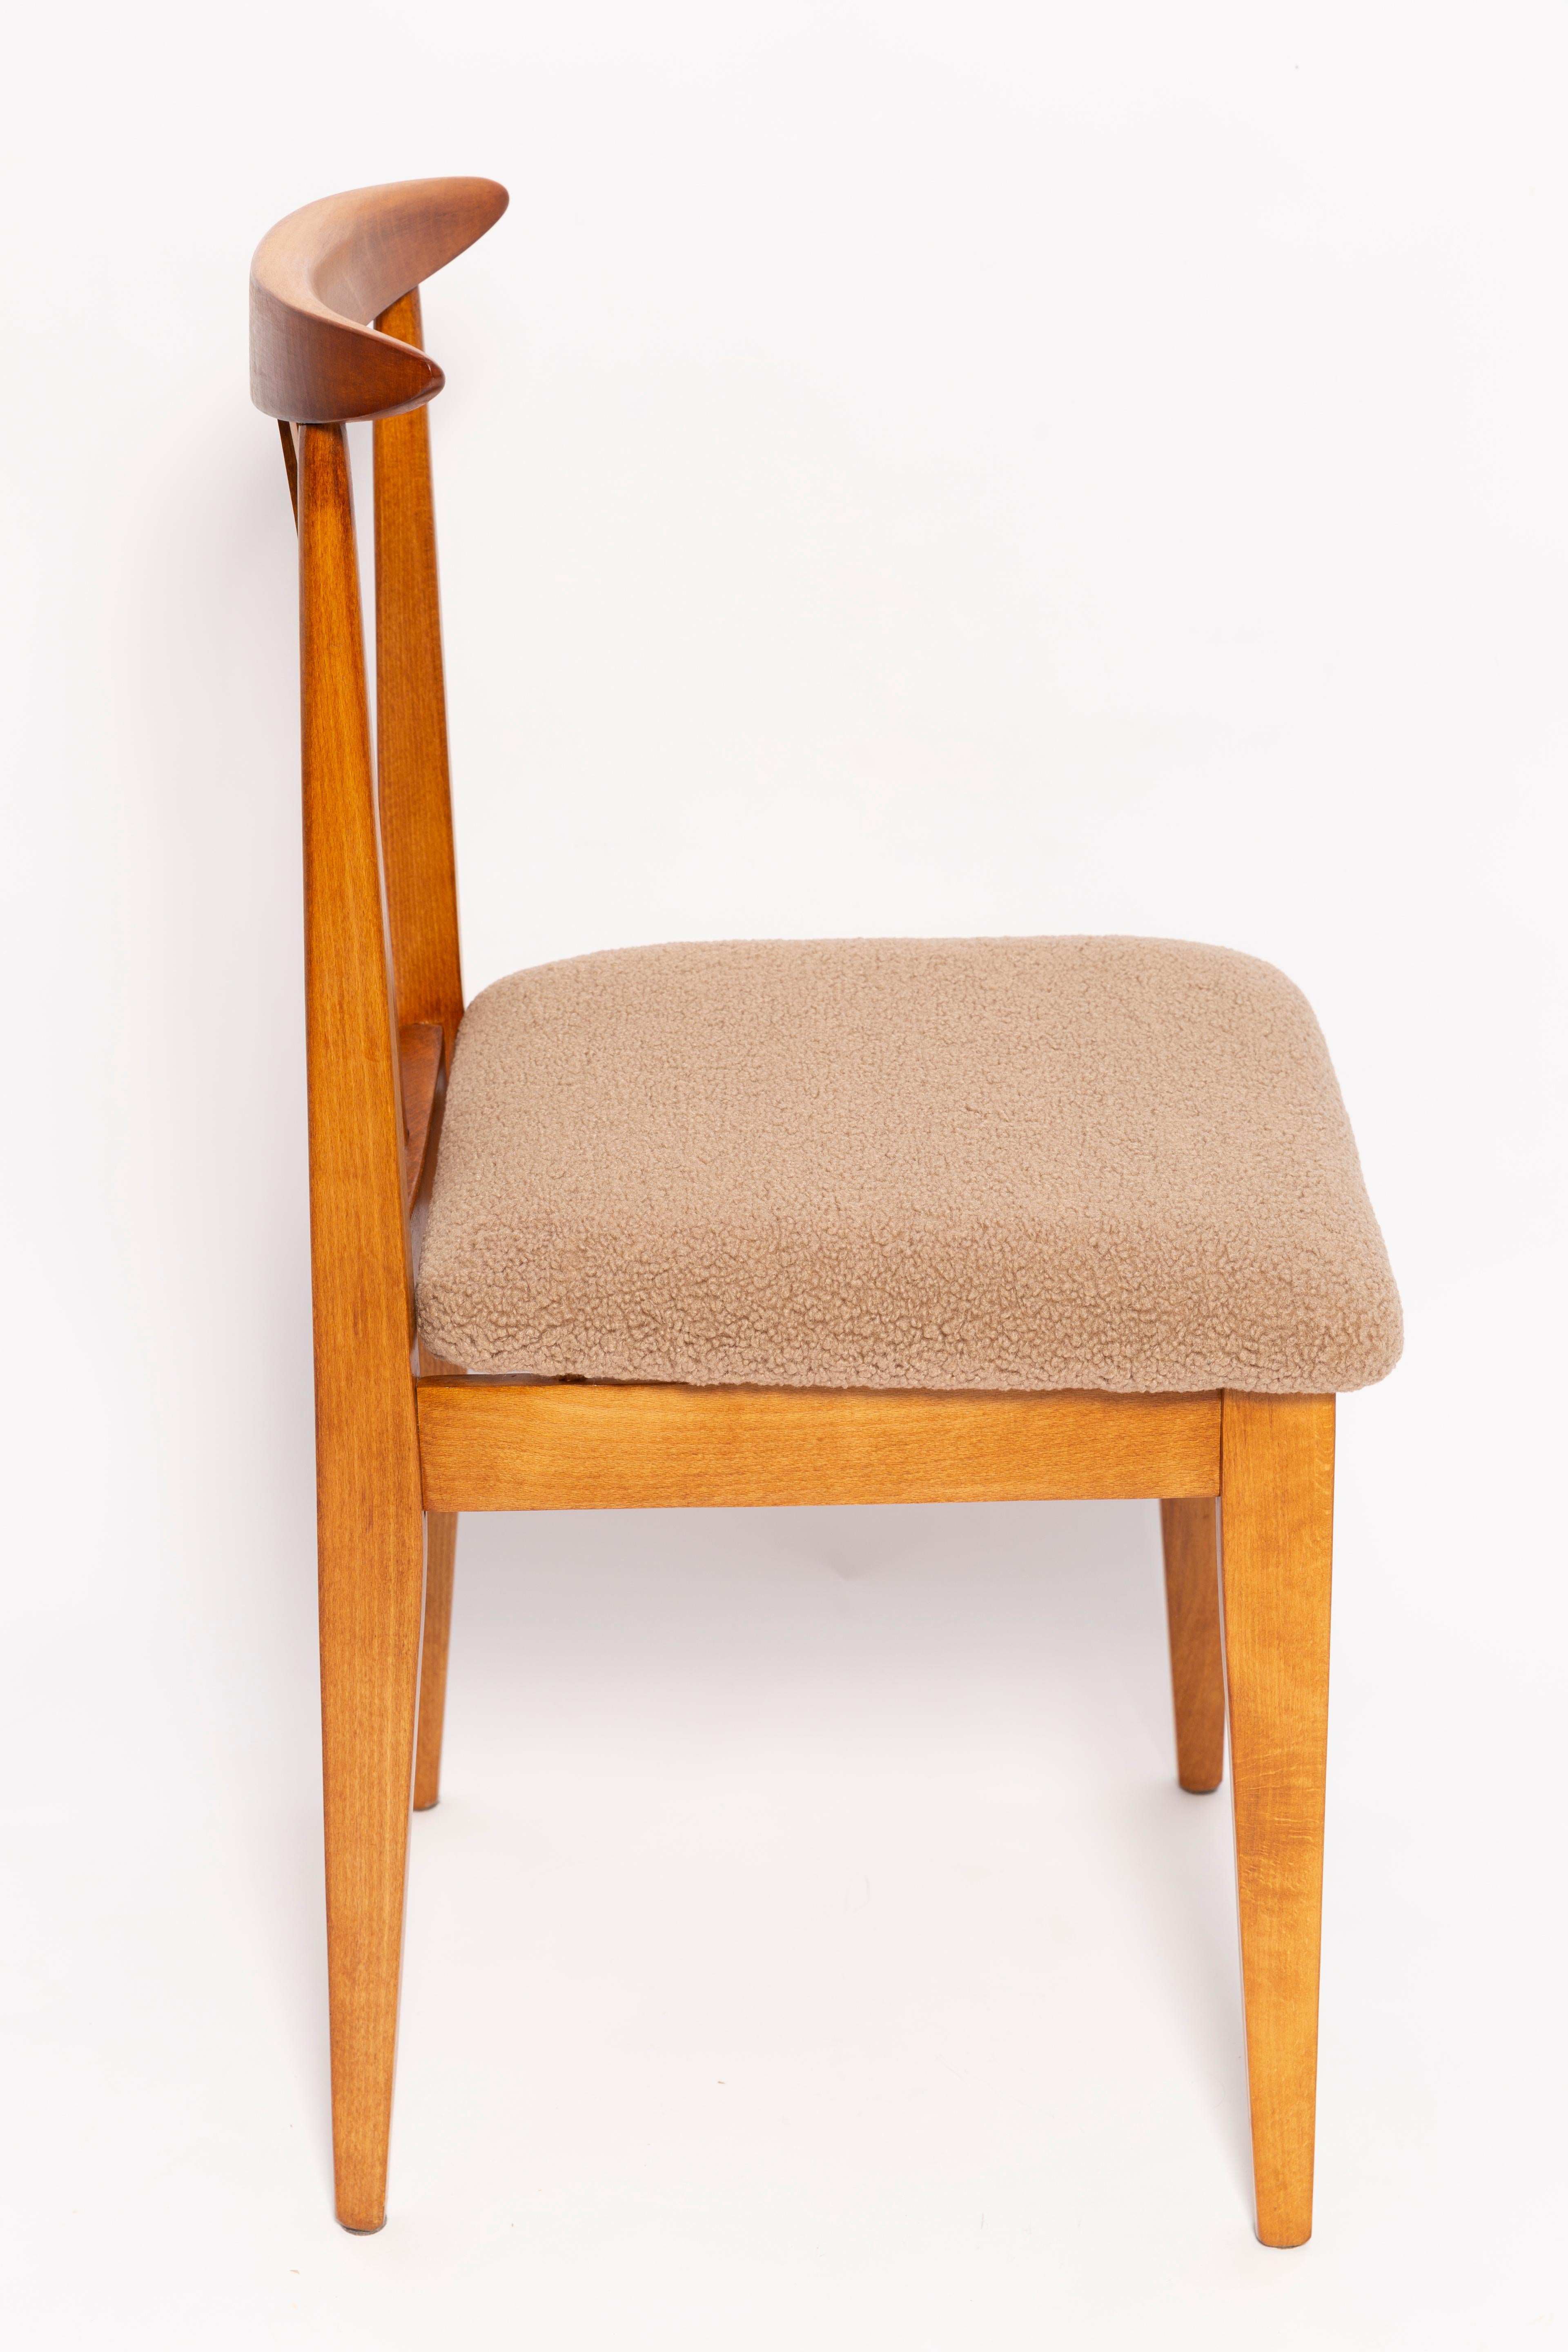 20th Century Mid-Century Latte Boucle Chair, Medium Wood, M. Zielinski, Europe 1960s For Sale